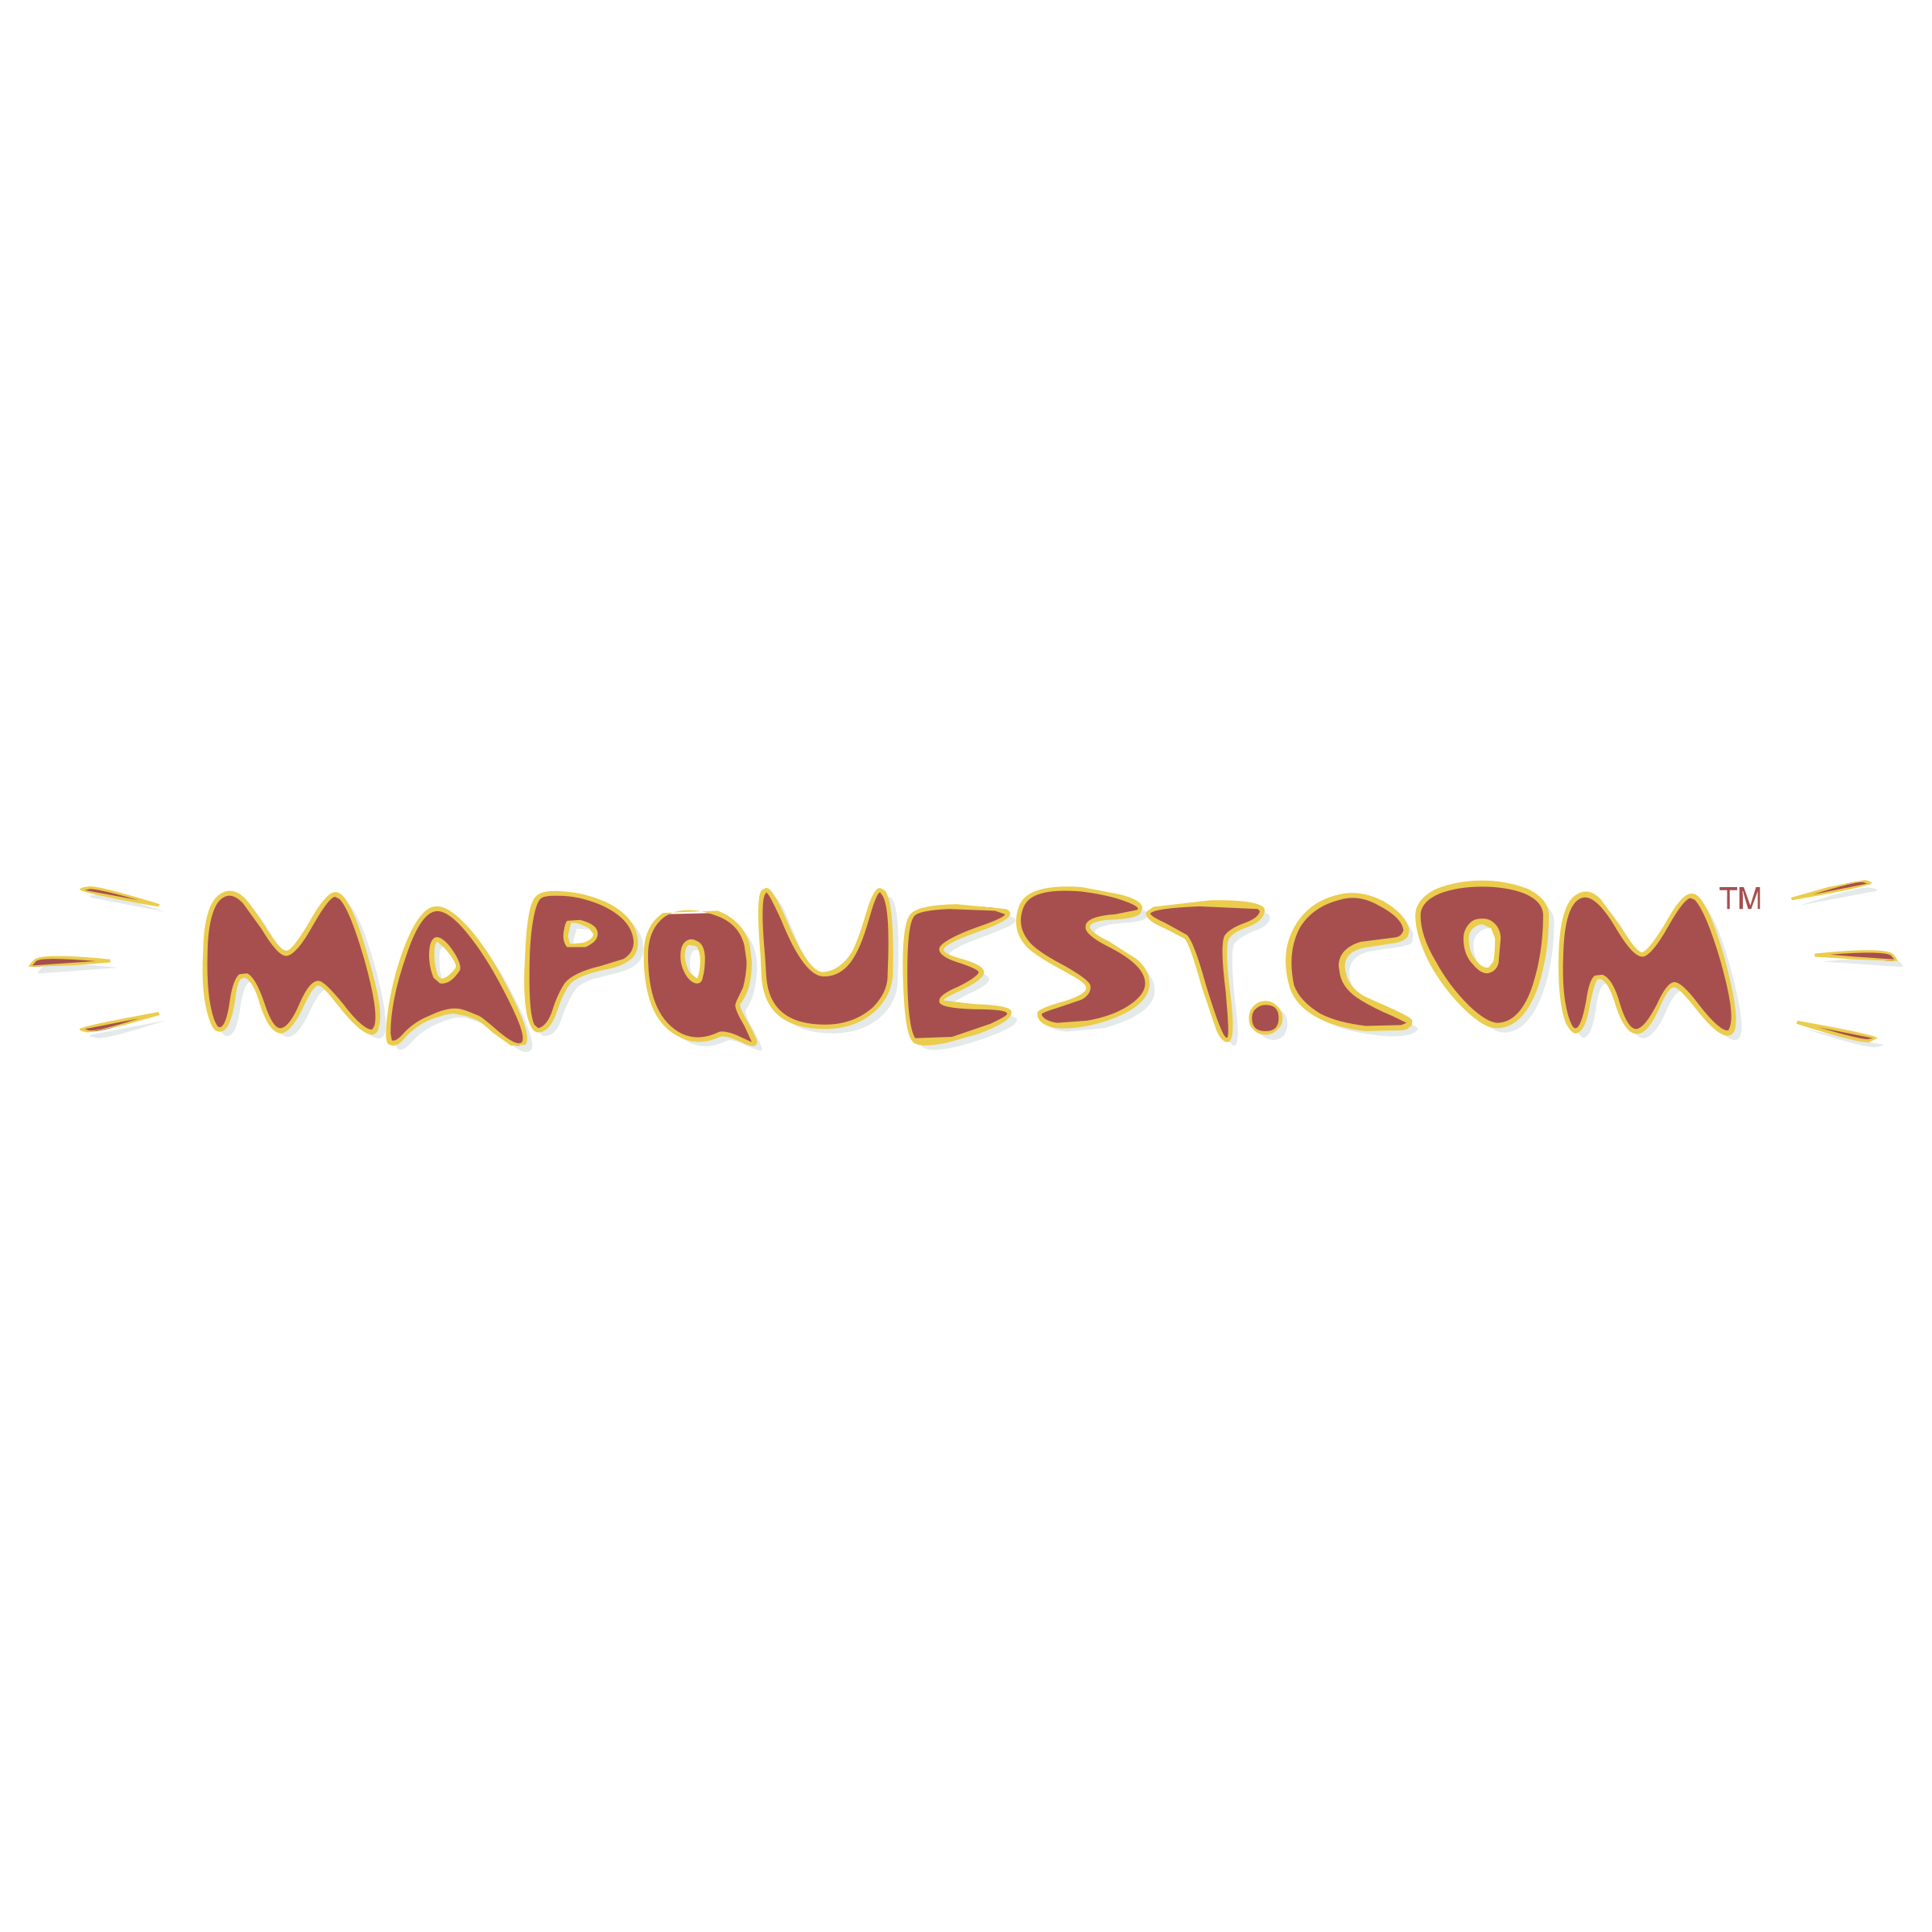 MapQuest Logo - MapQuest com Logo PNG Transparent & SVG Vector - Freebie Supply